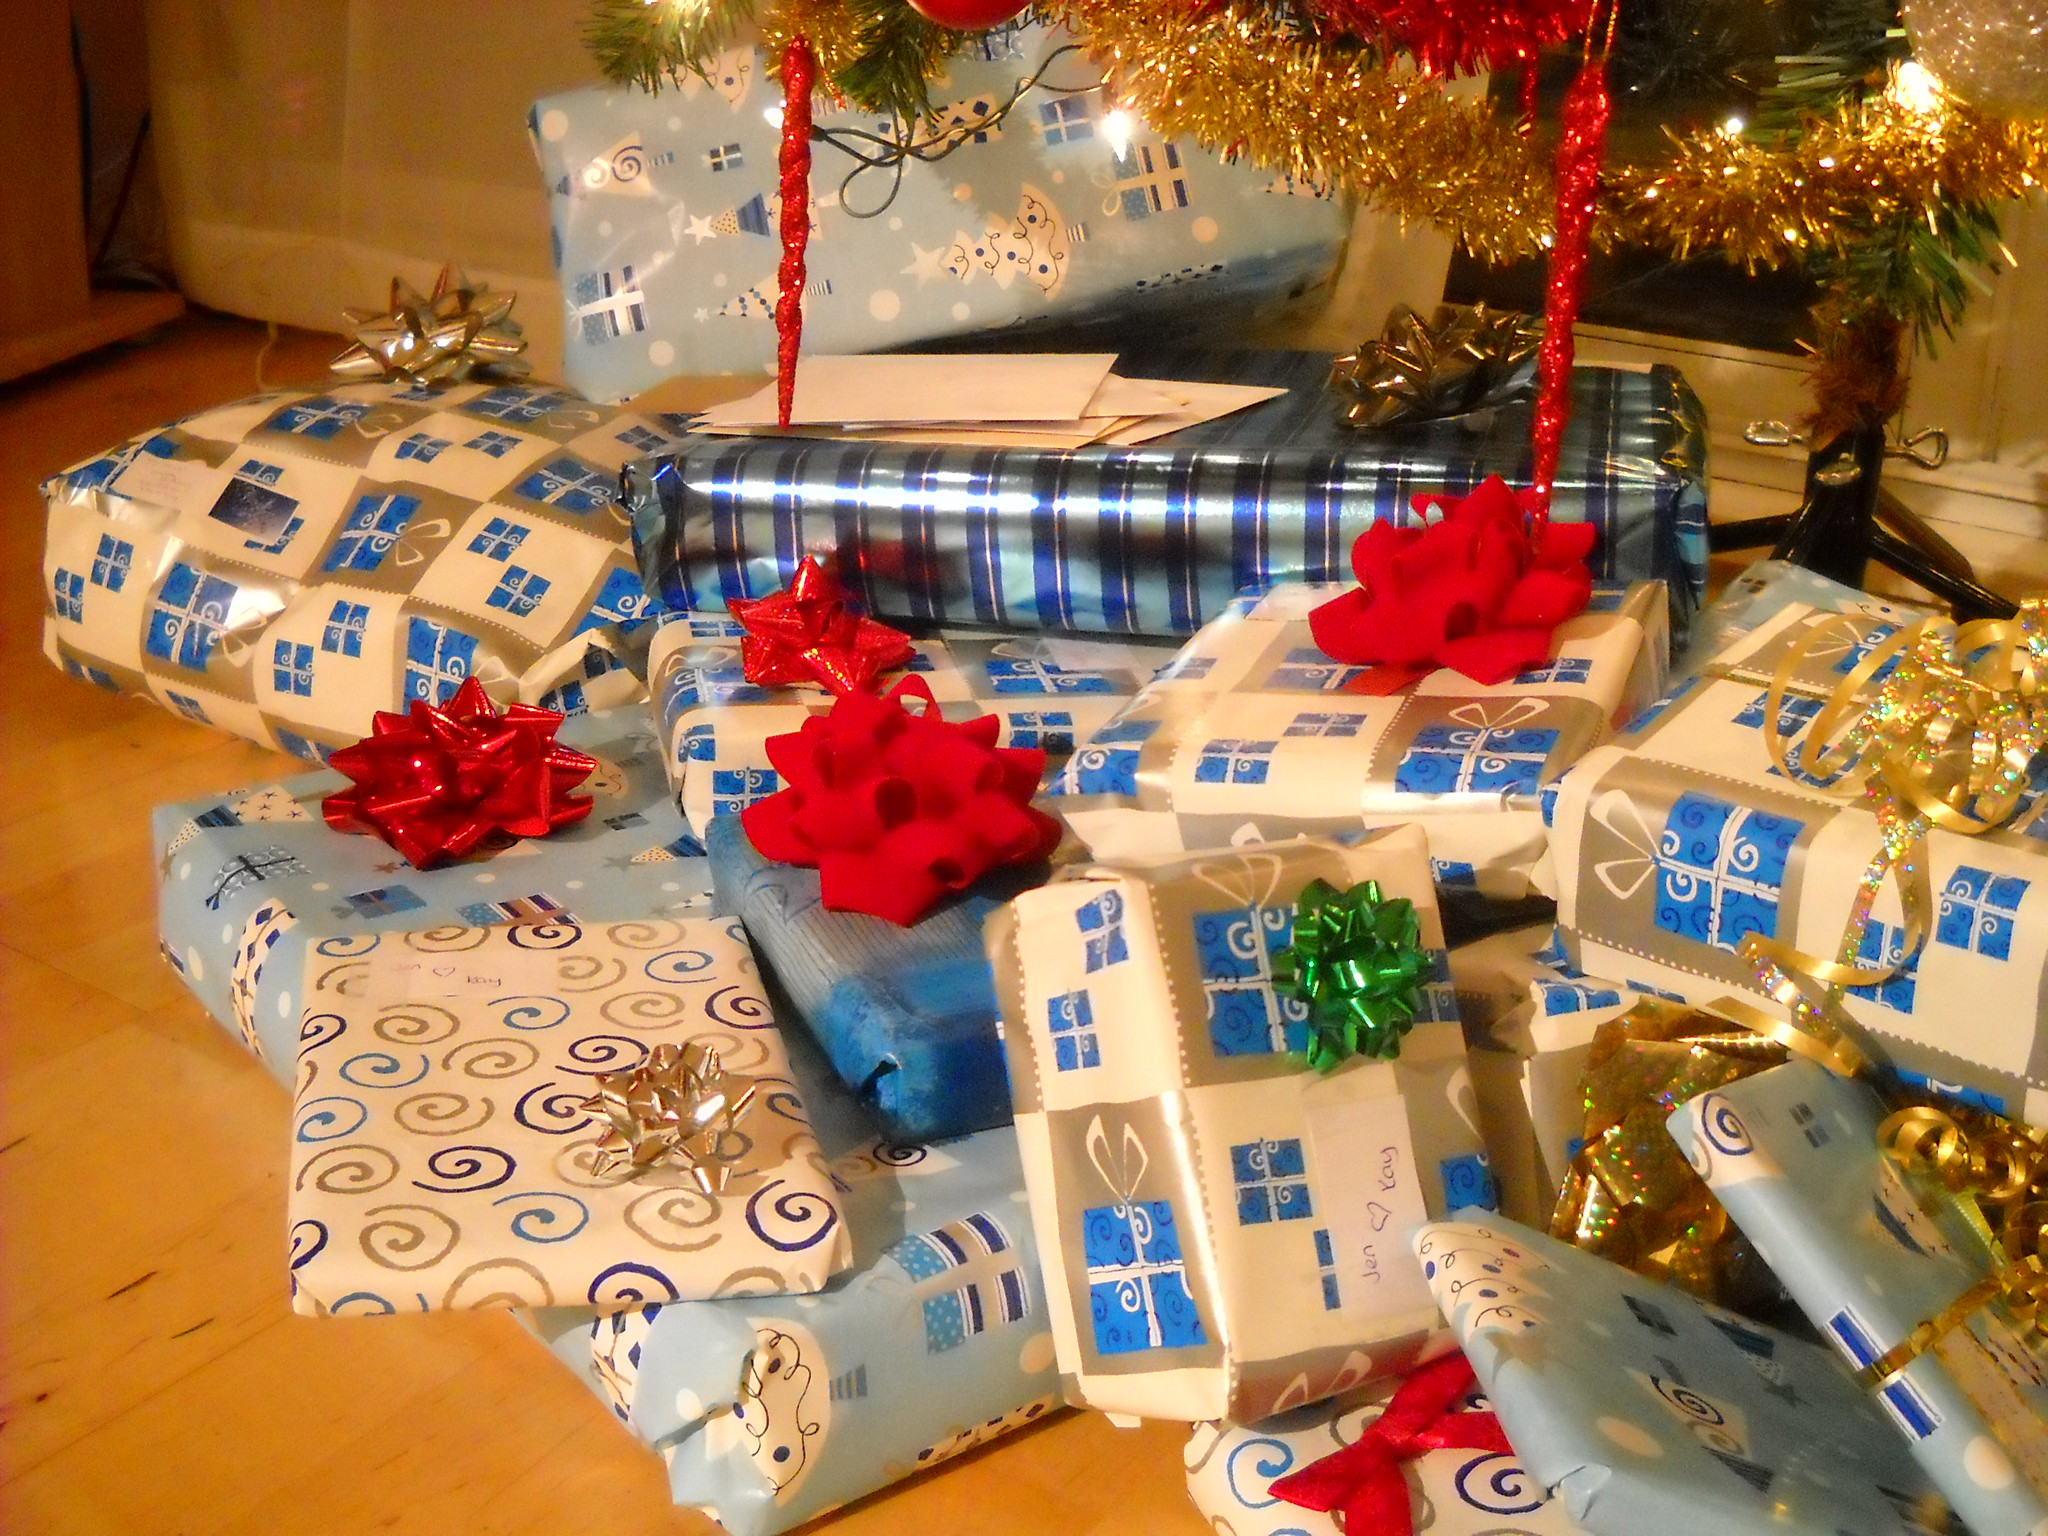 Cadeaux de Noël soigneusement emballés | Source : Flickr